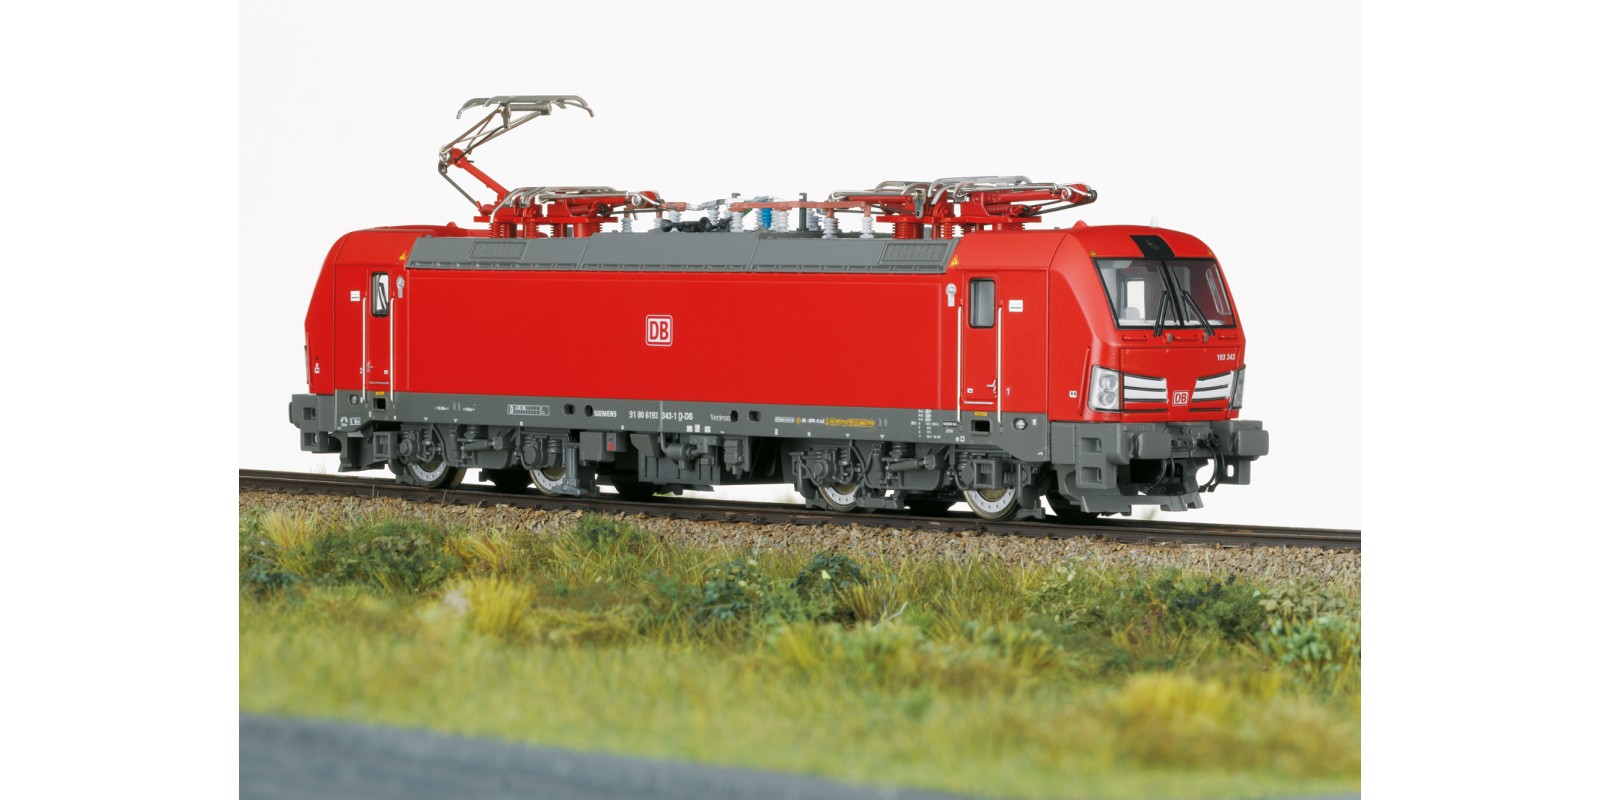 T25193 Class 193 Electric Locomotive